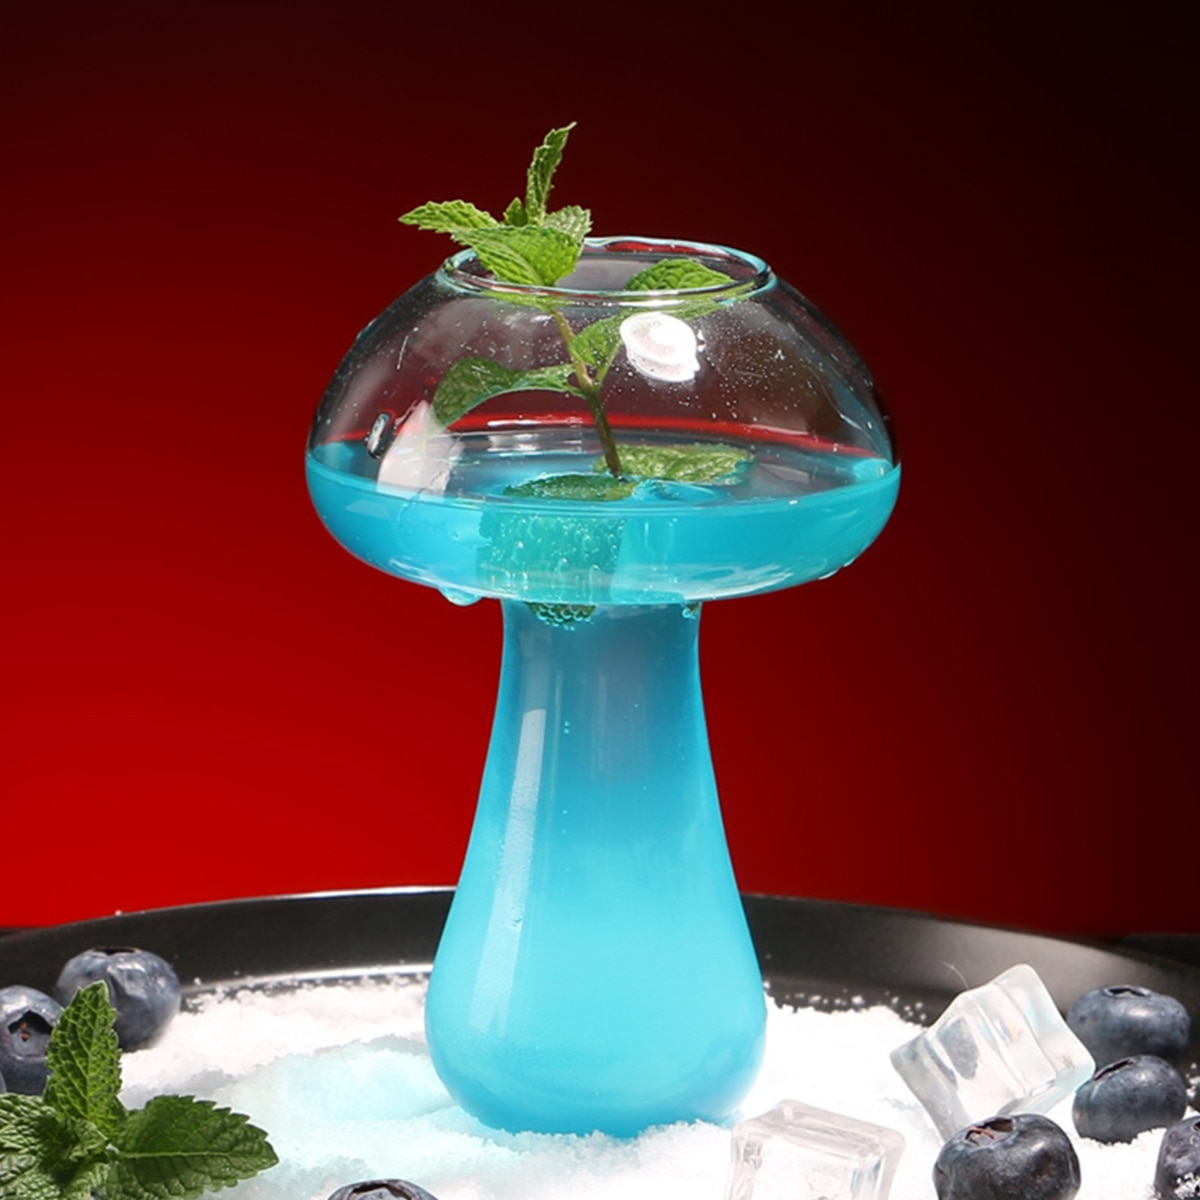 285Ml Mushroom Cocktail Glass Cup